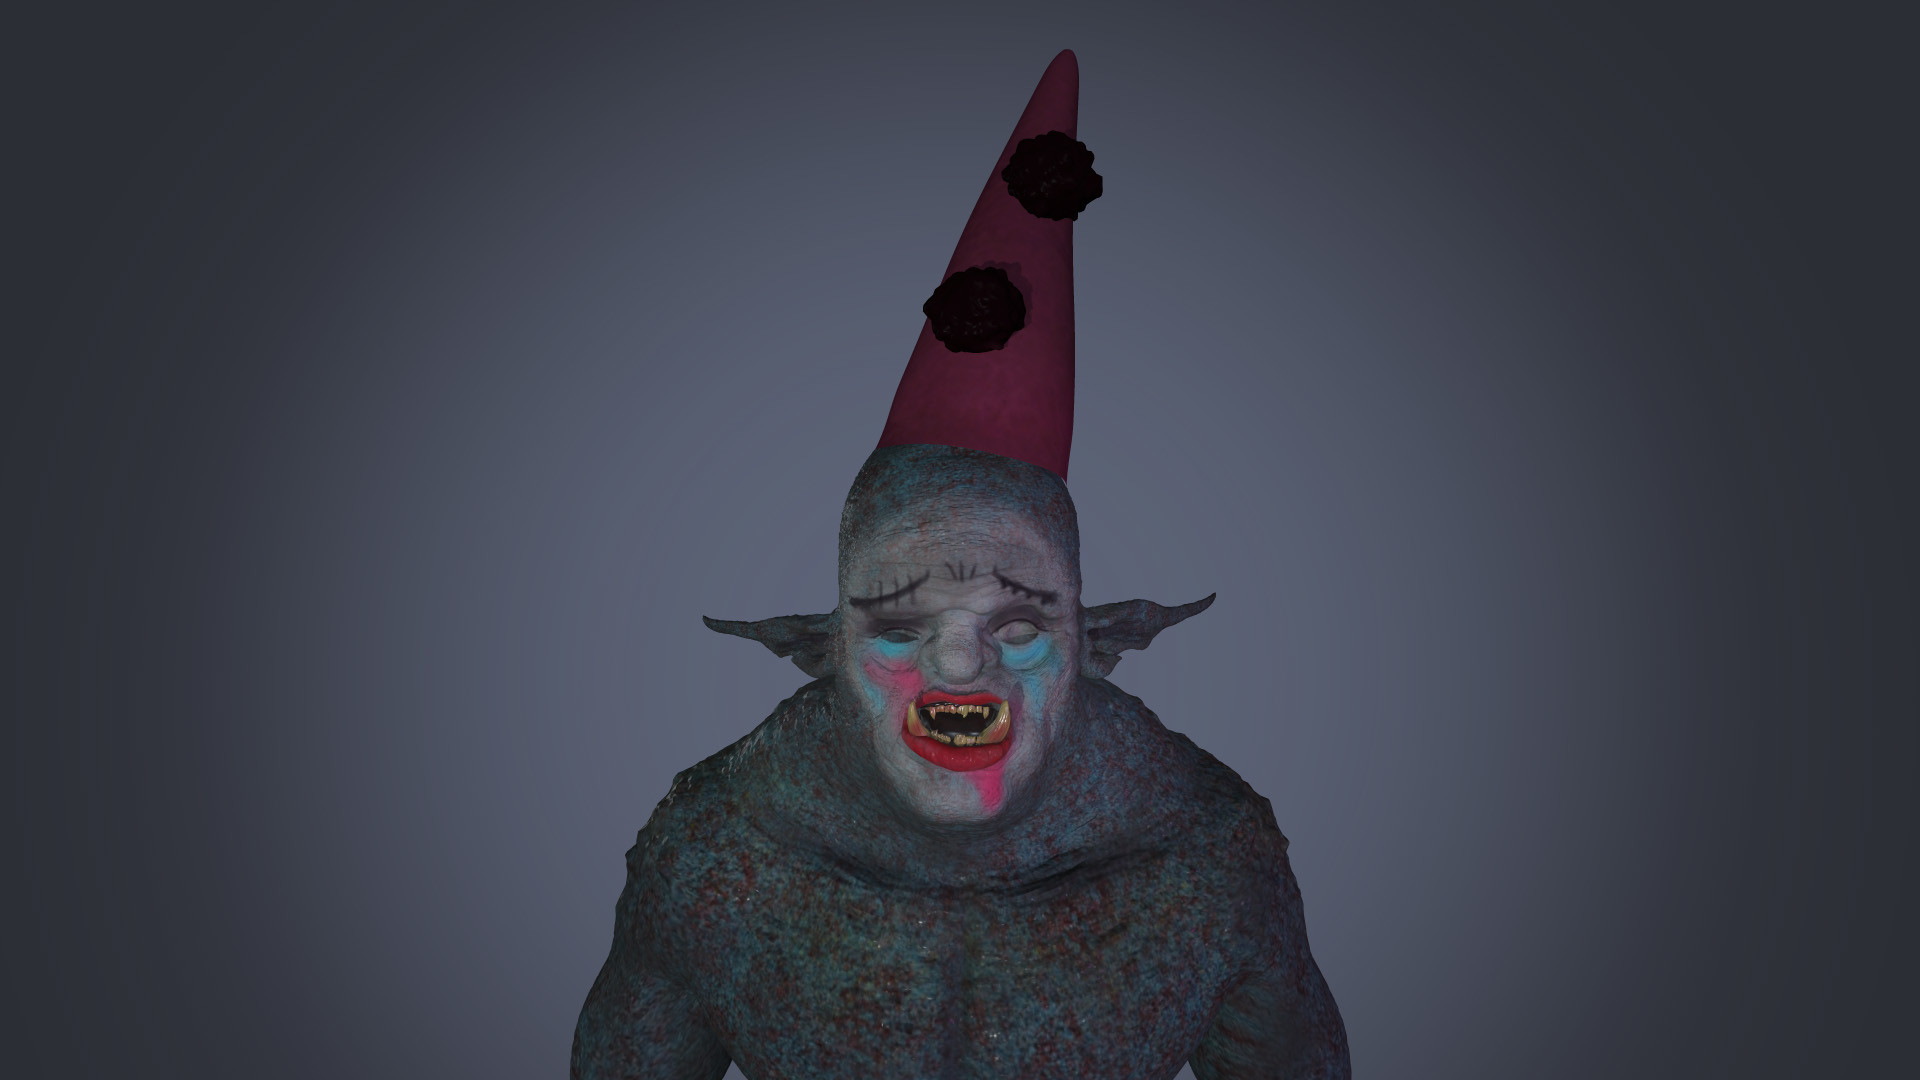 ArtStation - Opera Clown Ogre texture